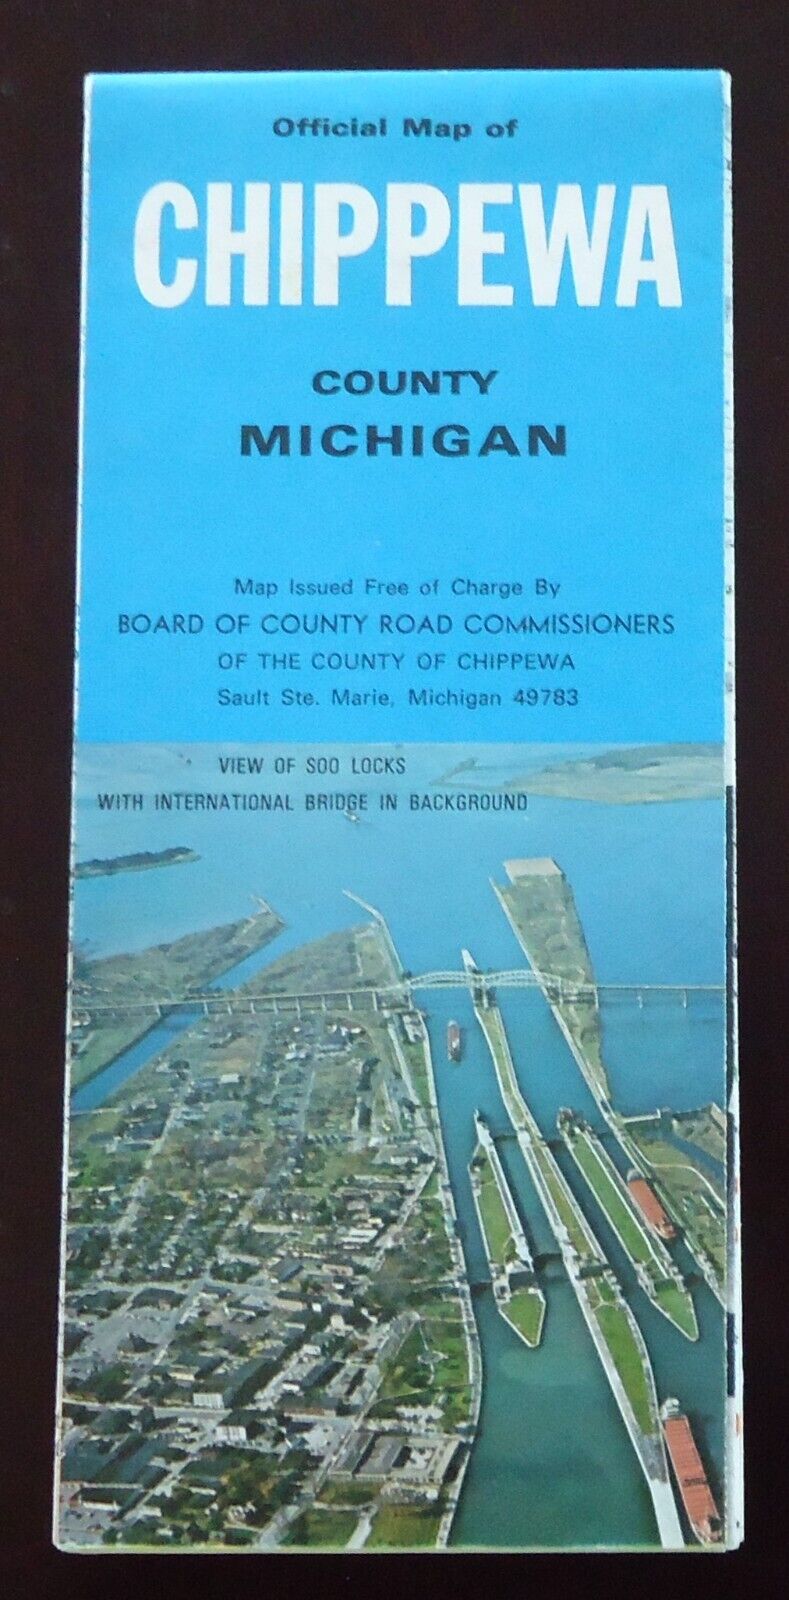 An Official Map of Chippewa Michigan